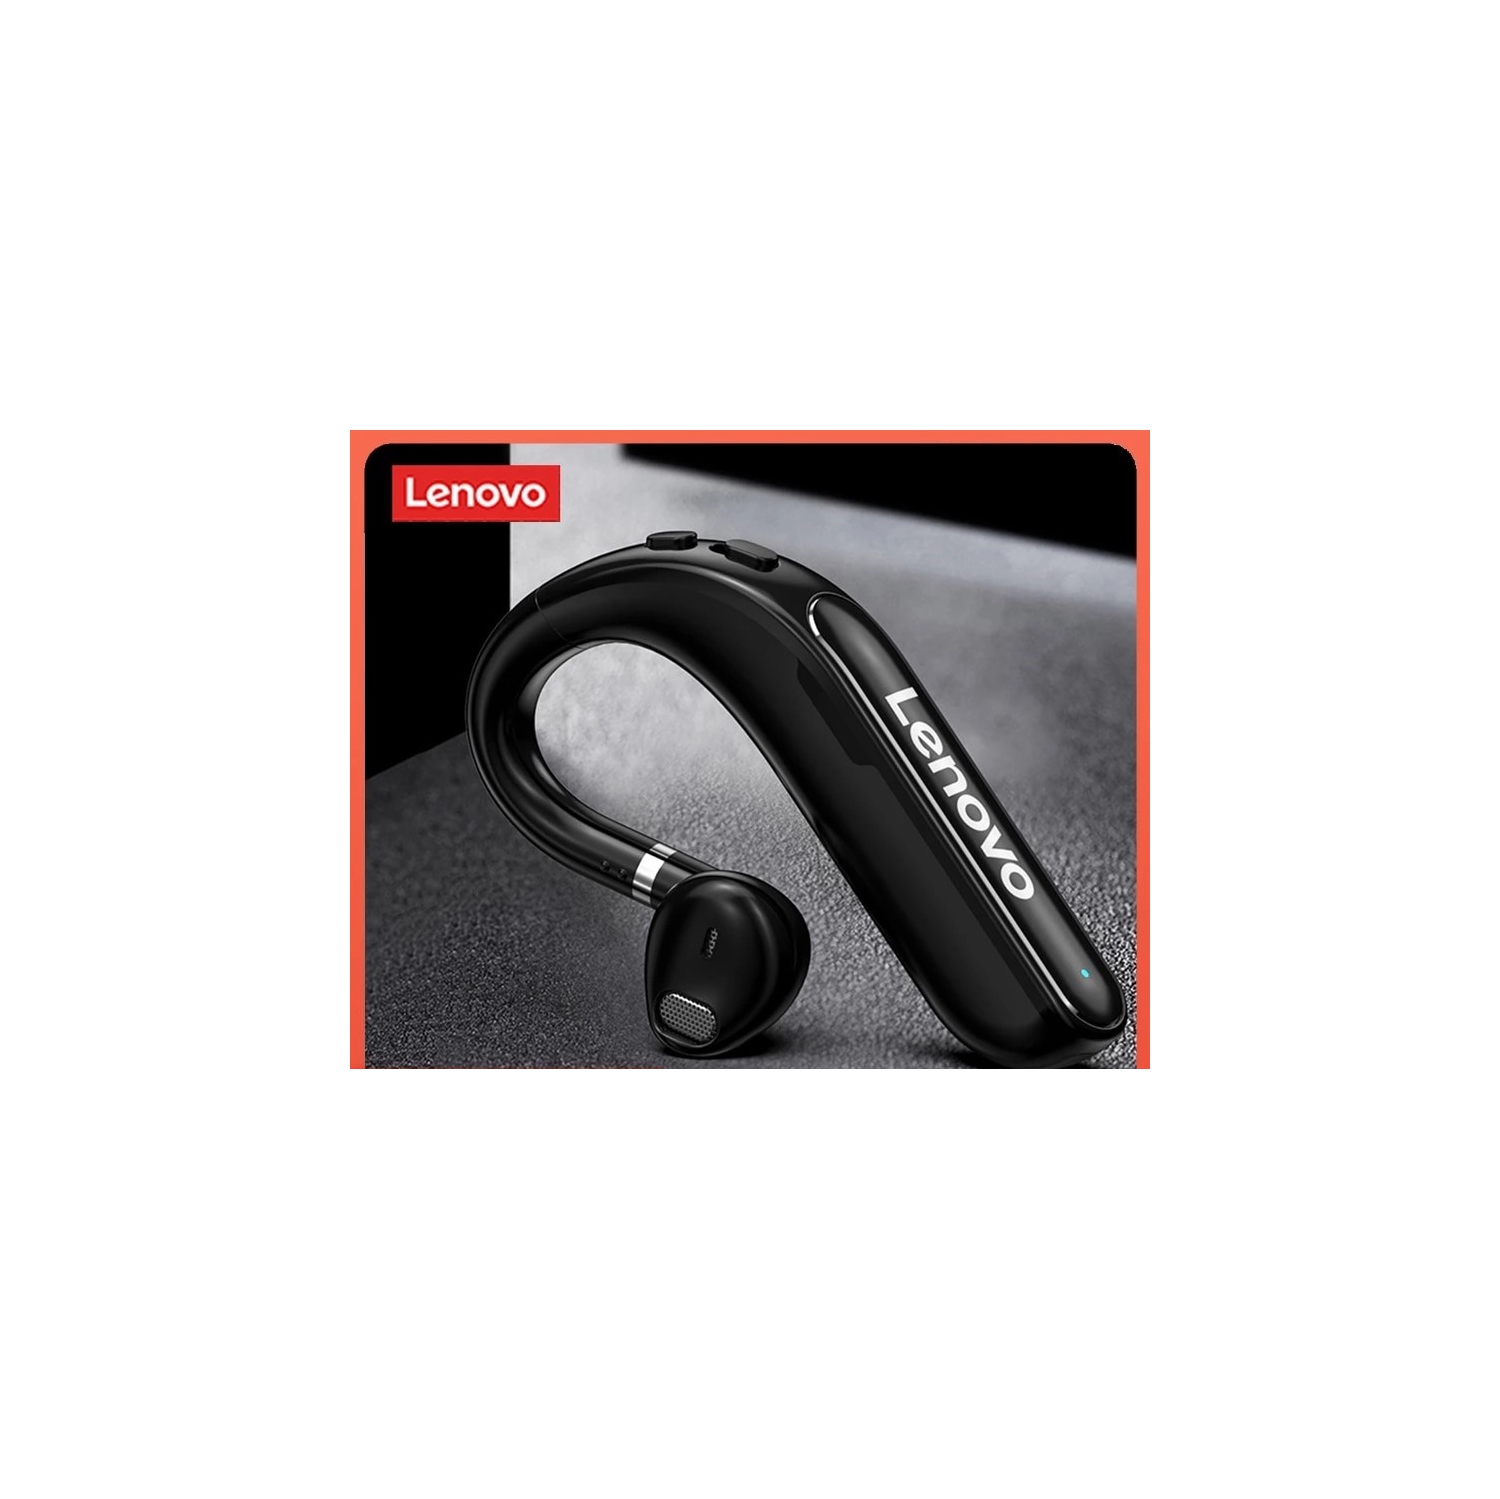 Lenovo TW16 Bluetooth Earphones Handsfree Wireless Headphone IPX5 Waterproof Headset with mic for Driving Meeting